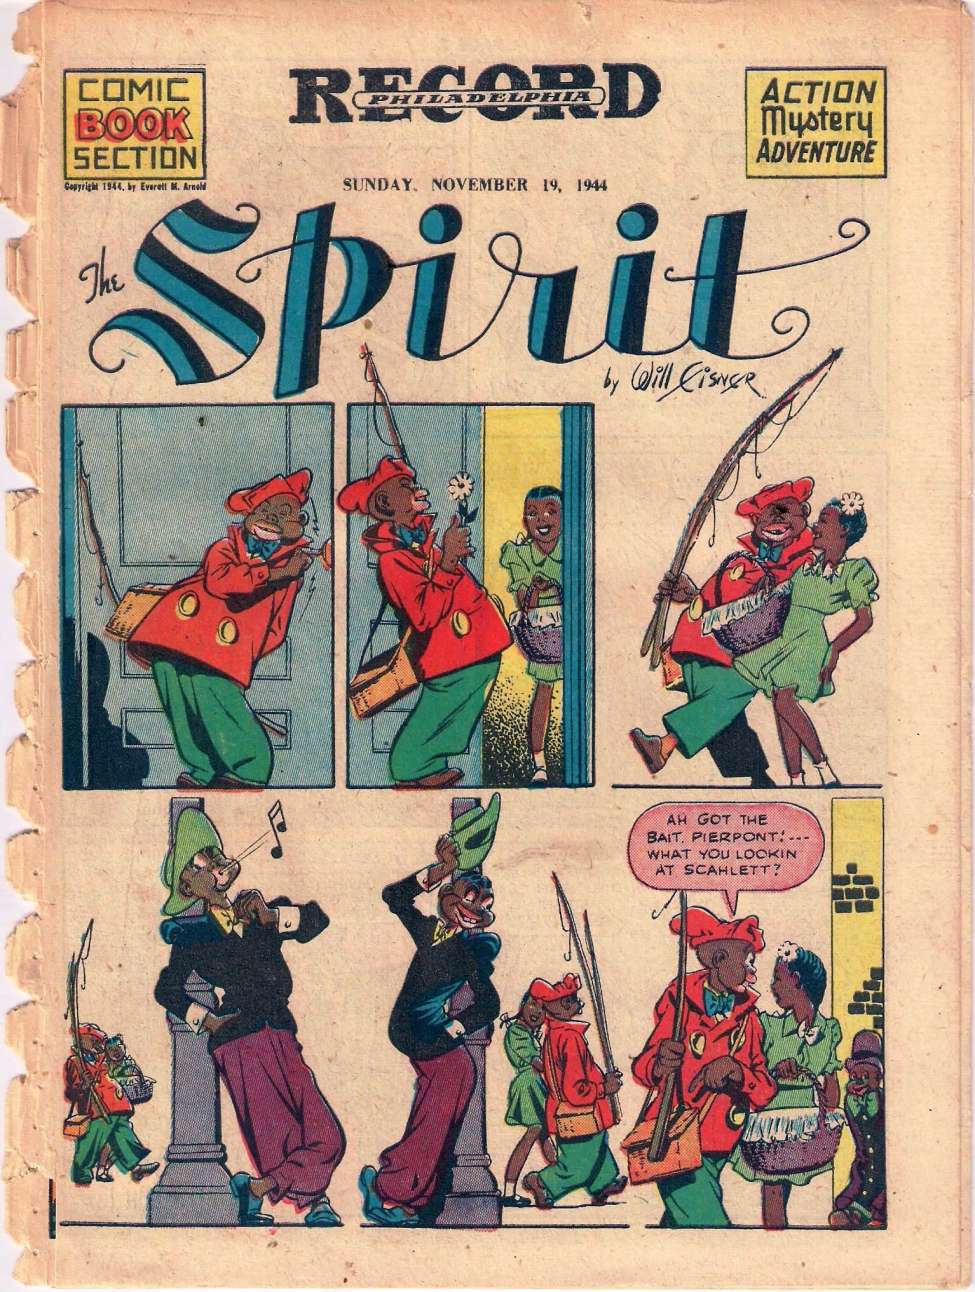 Comic Book Cover For The Spirit (1944-11-19) - Philadelphia Record